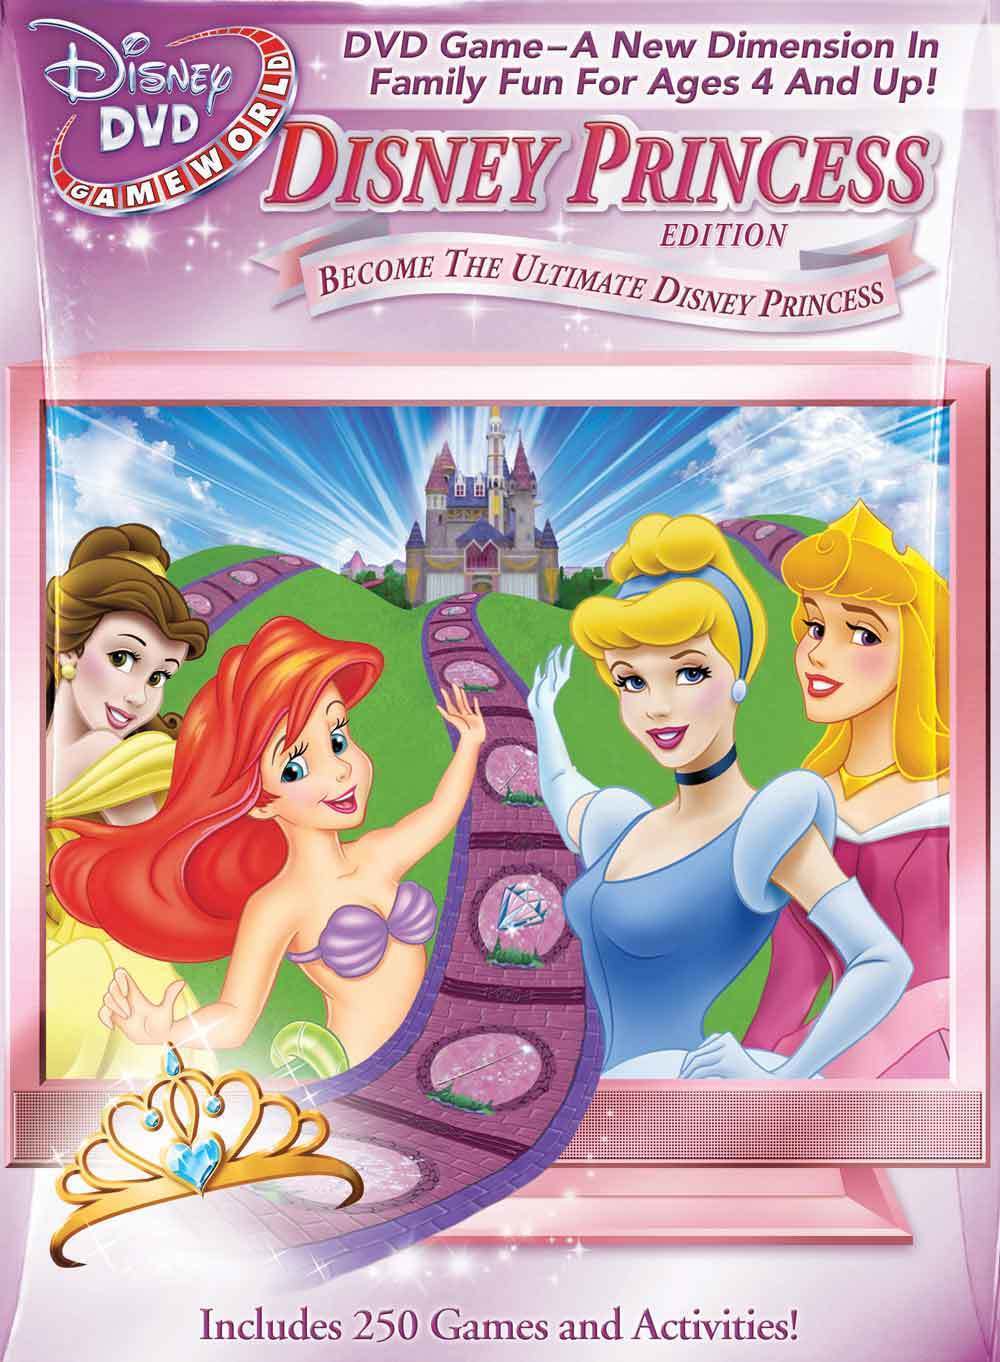 Disney DVD Game World Disney Princess Edition Disney Movies